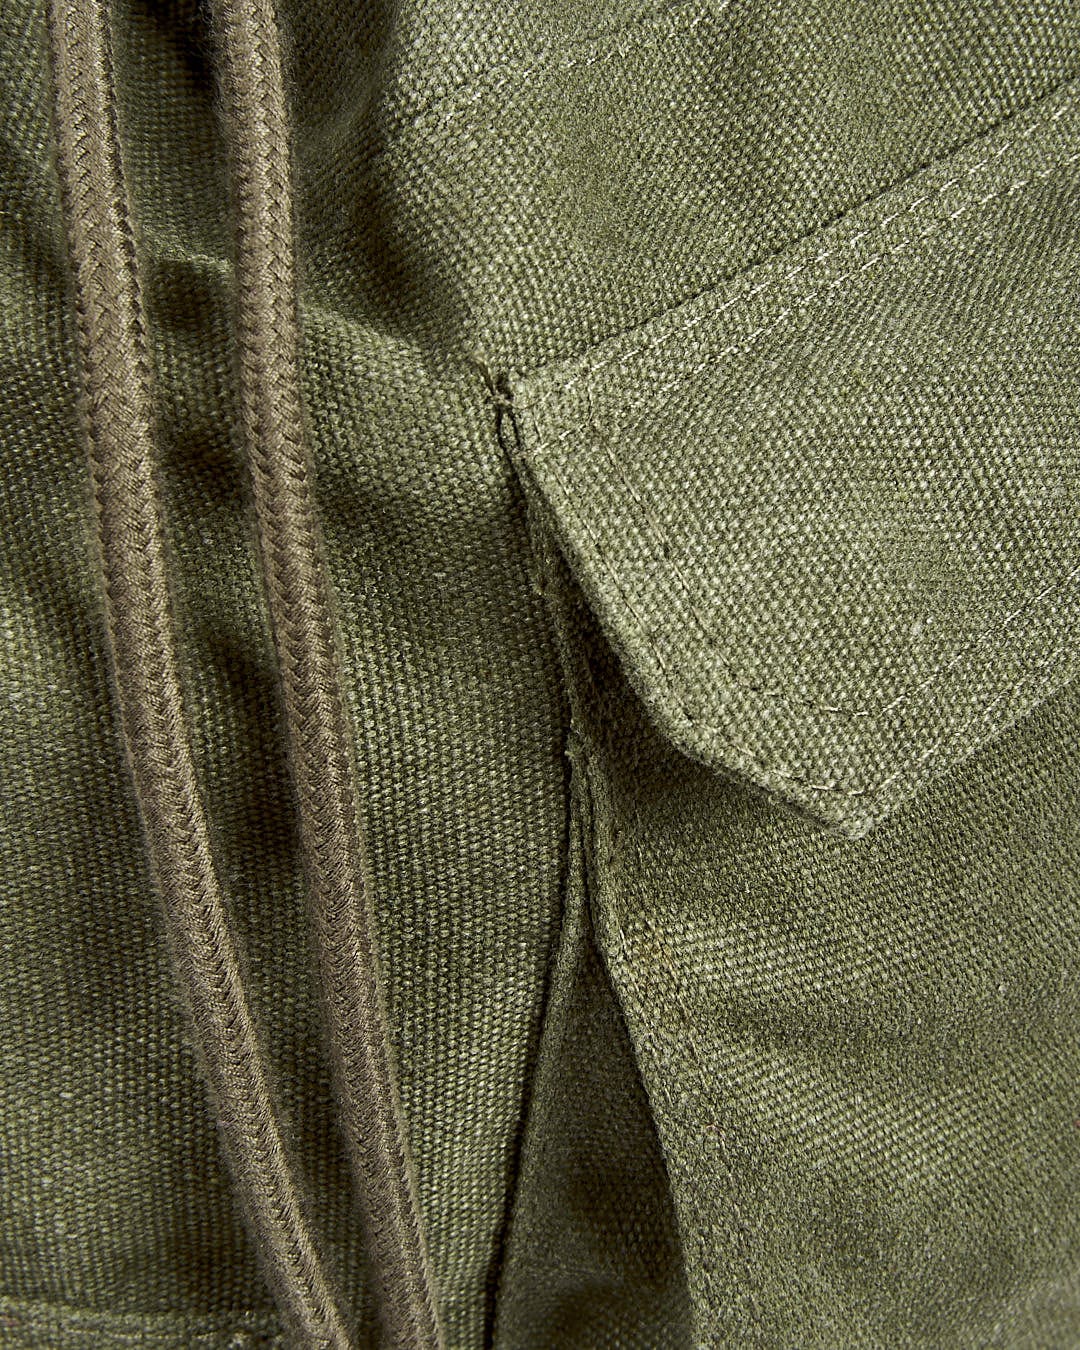 A close up of a Saltrock Dockyard - Duffle Bag - Dark Green backpack.